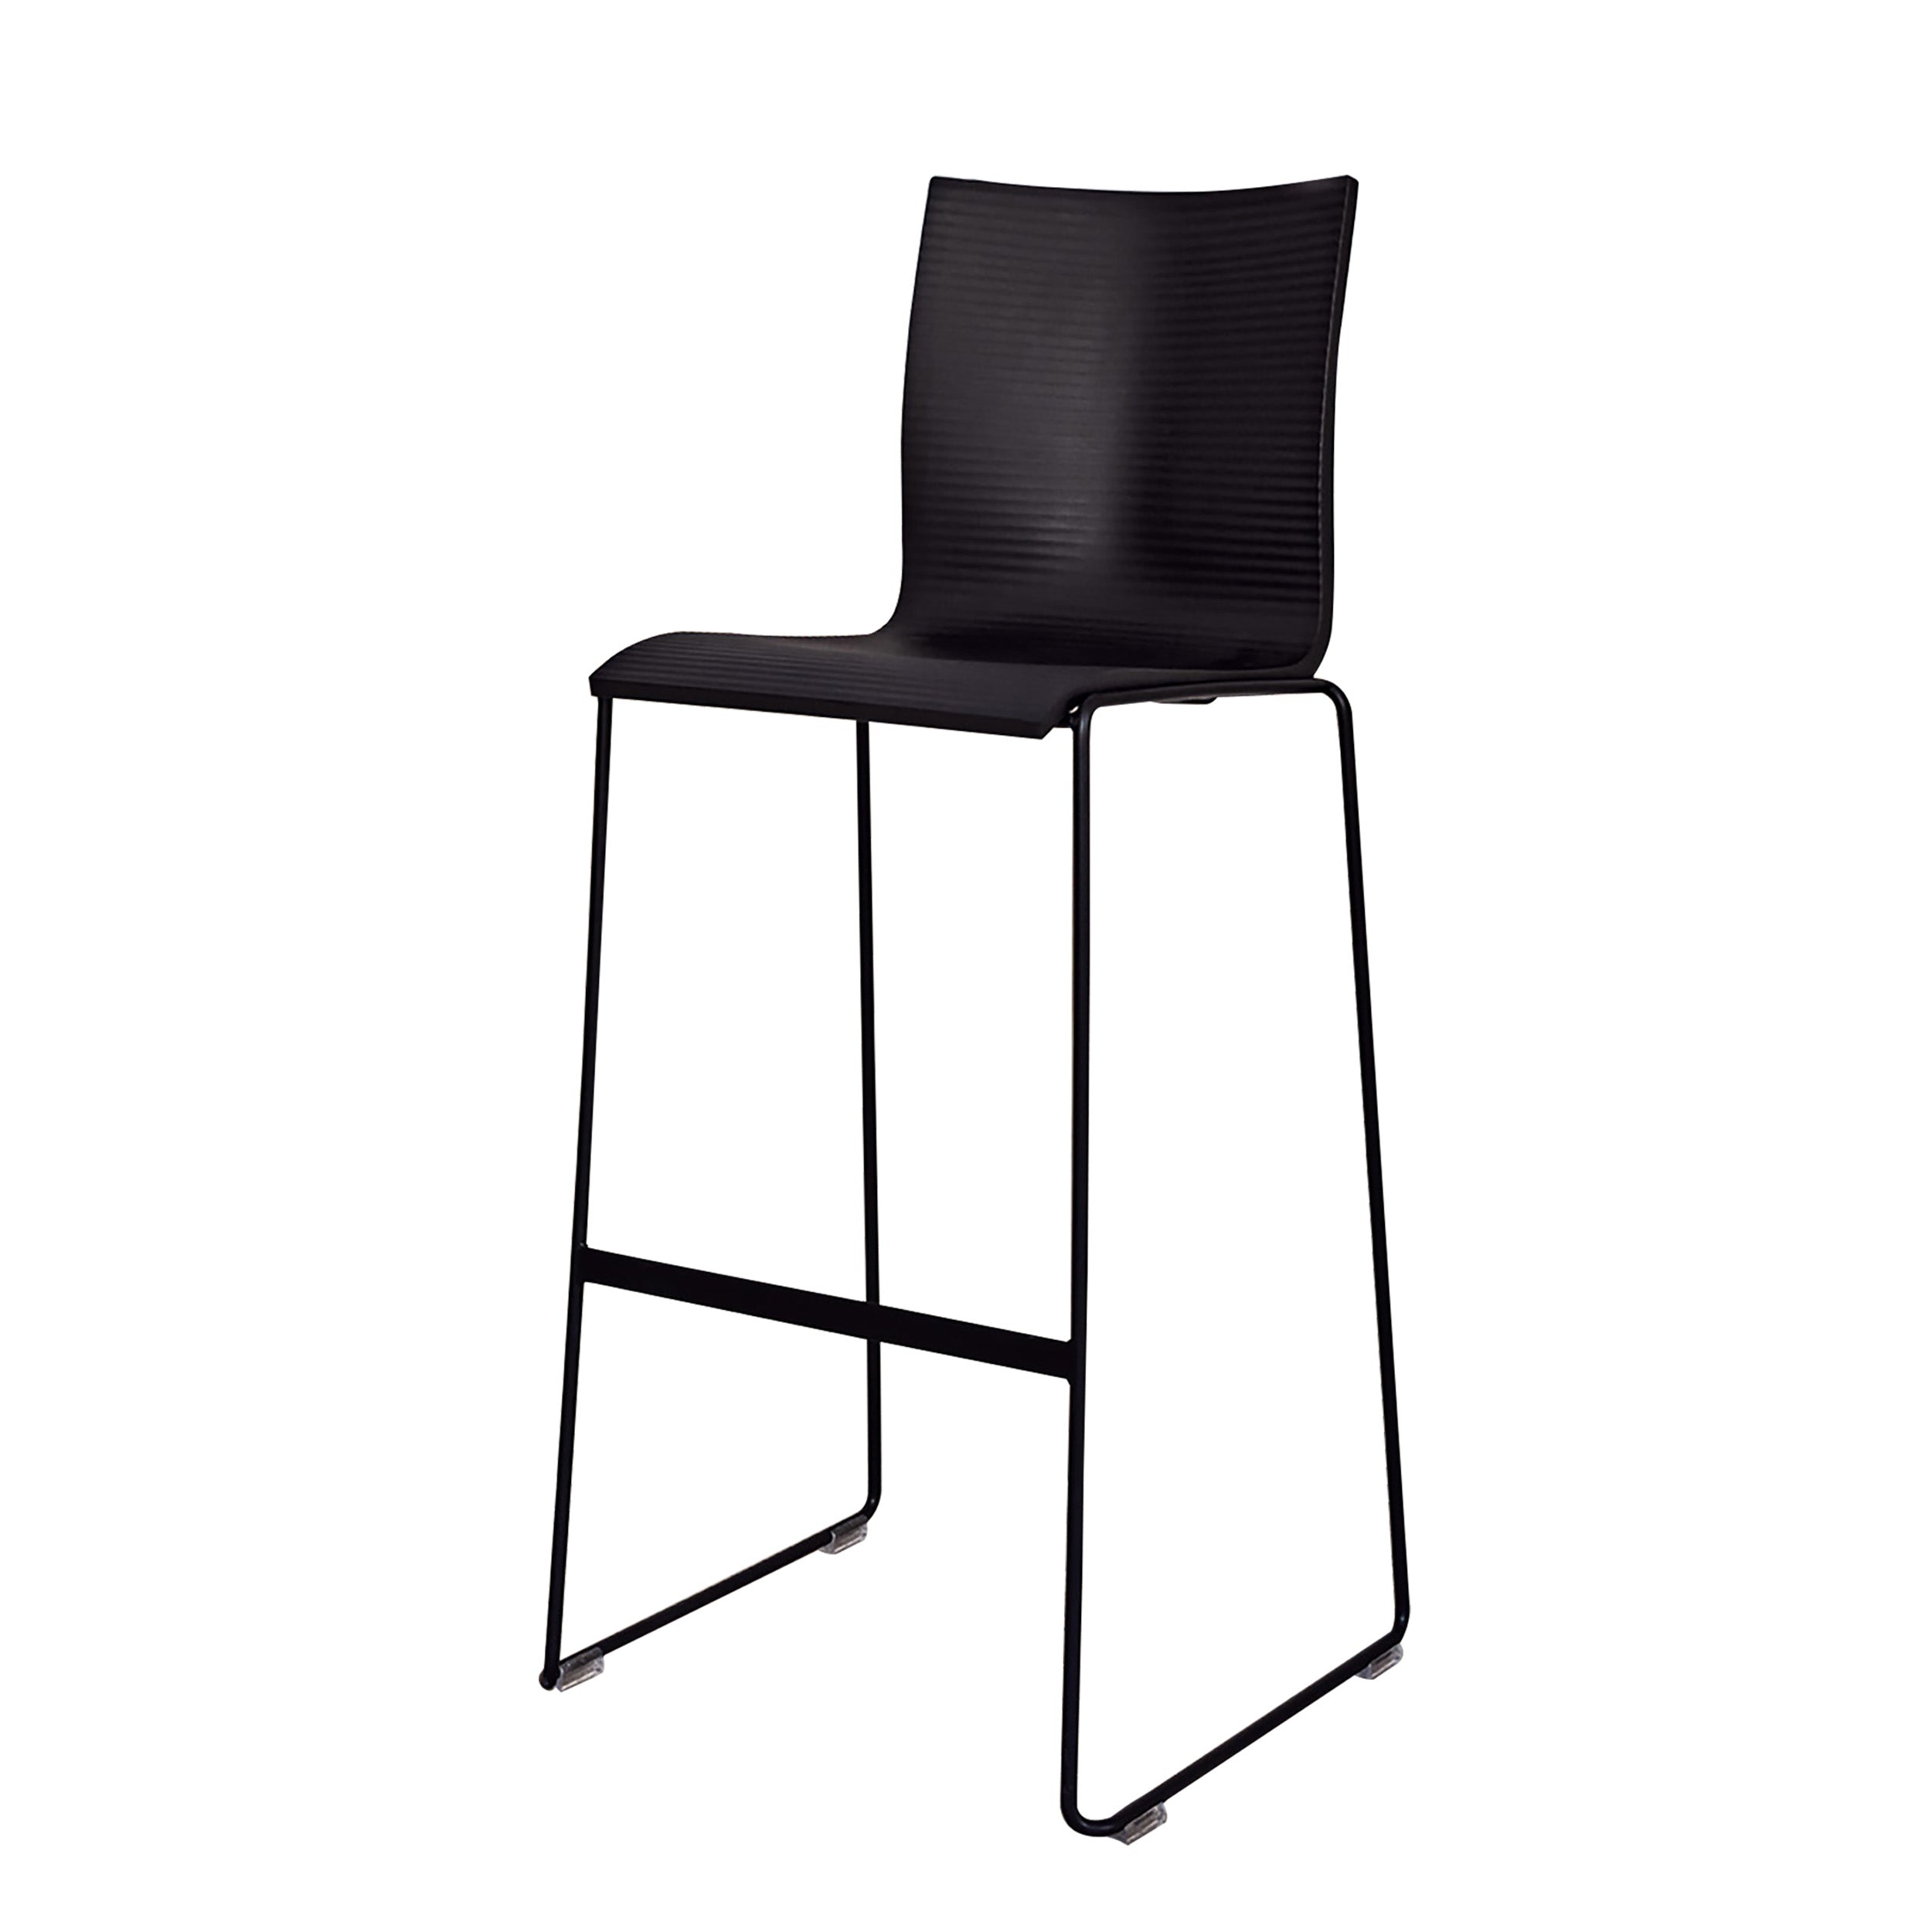 Chairik 117 Bar Chair: Sled Base + Pur - Black + Powder Coated Black